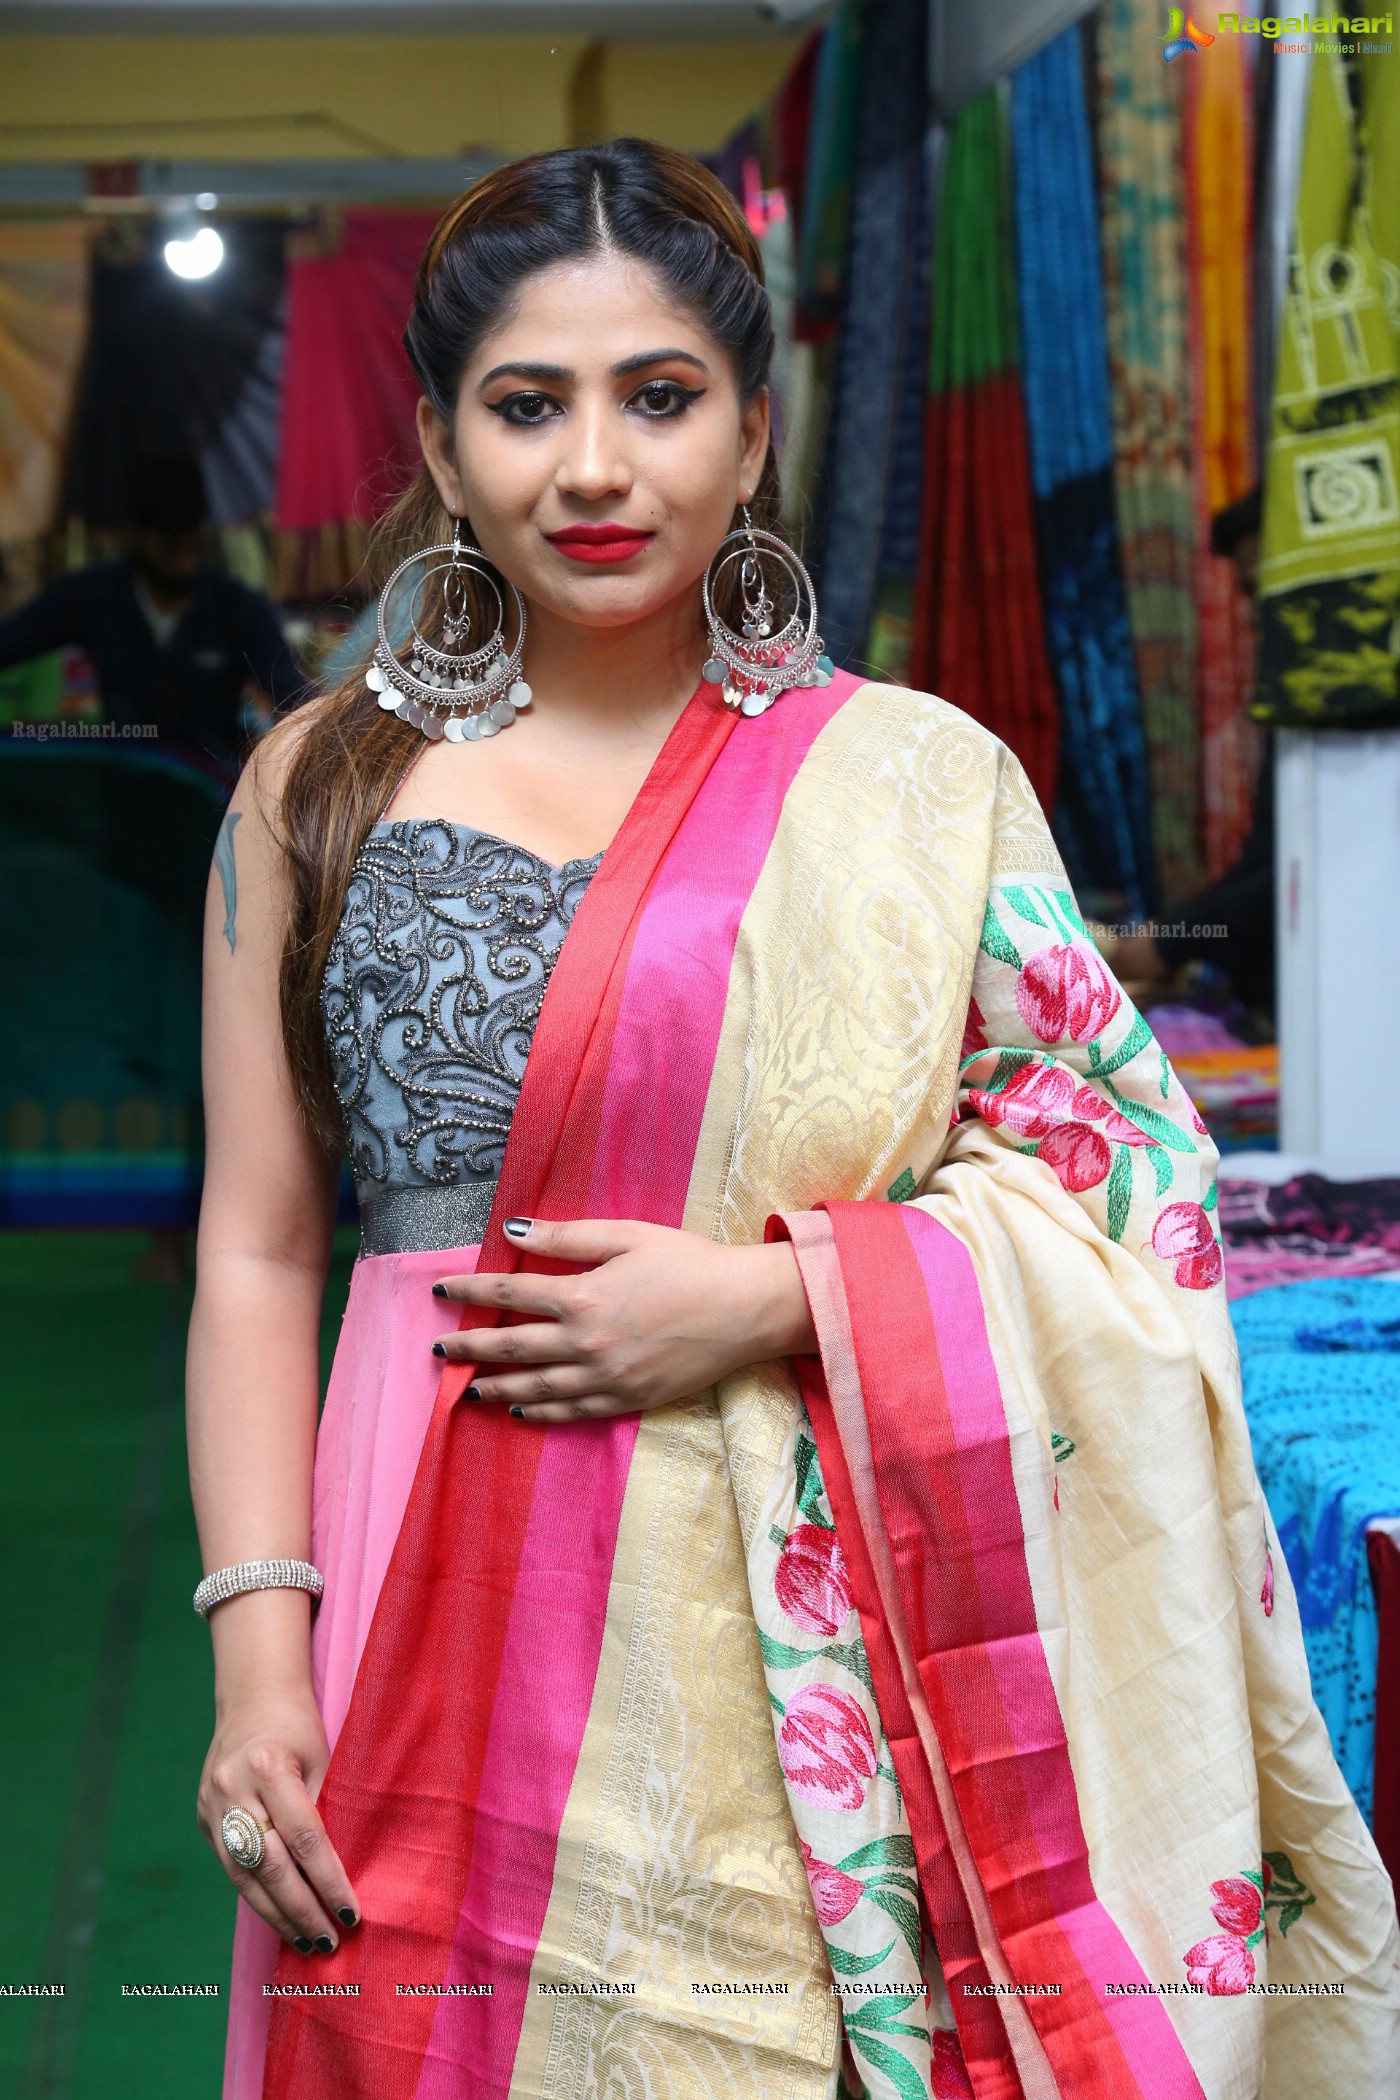 Madhulagna Das at Silk and Cotton Expo (High Resolution Photos)